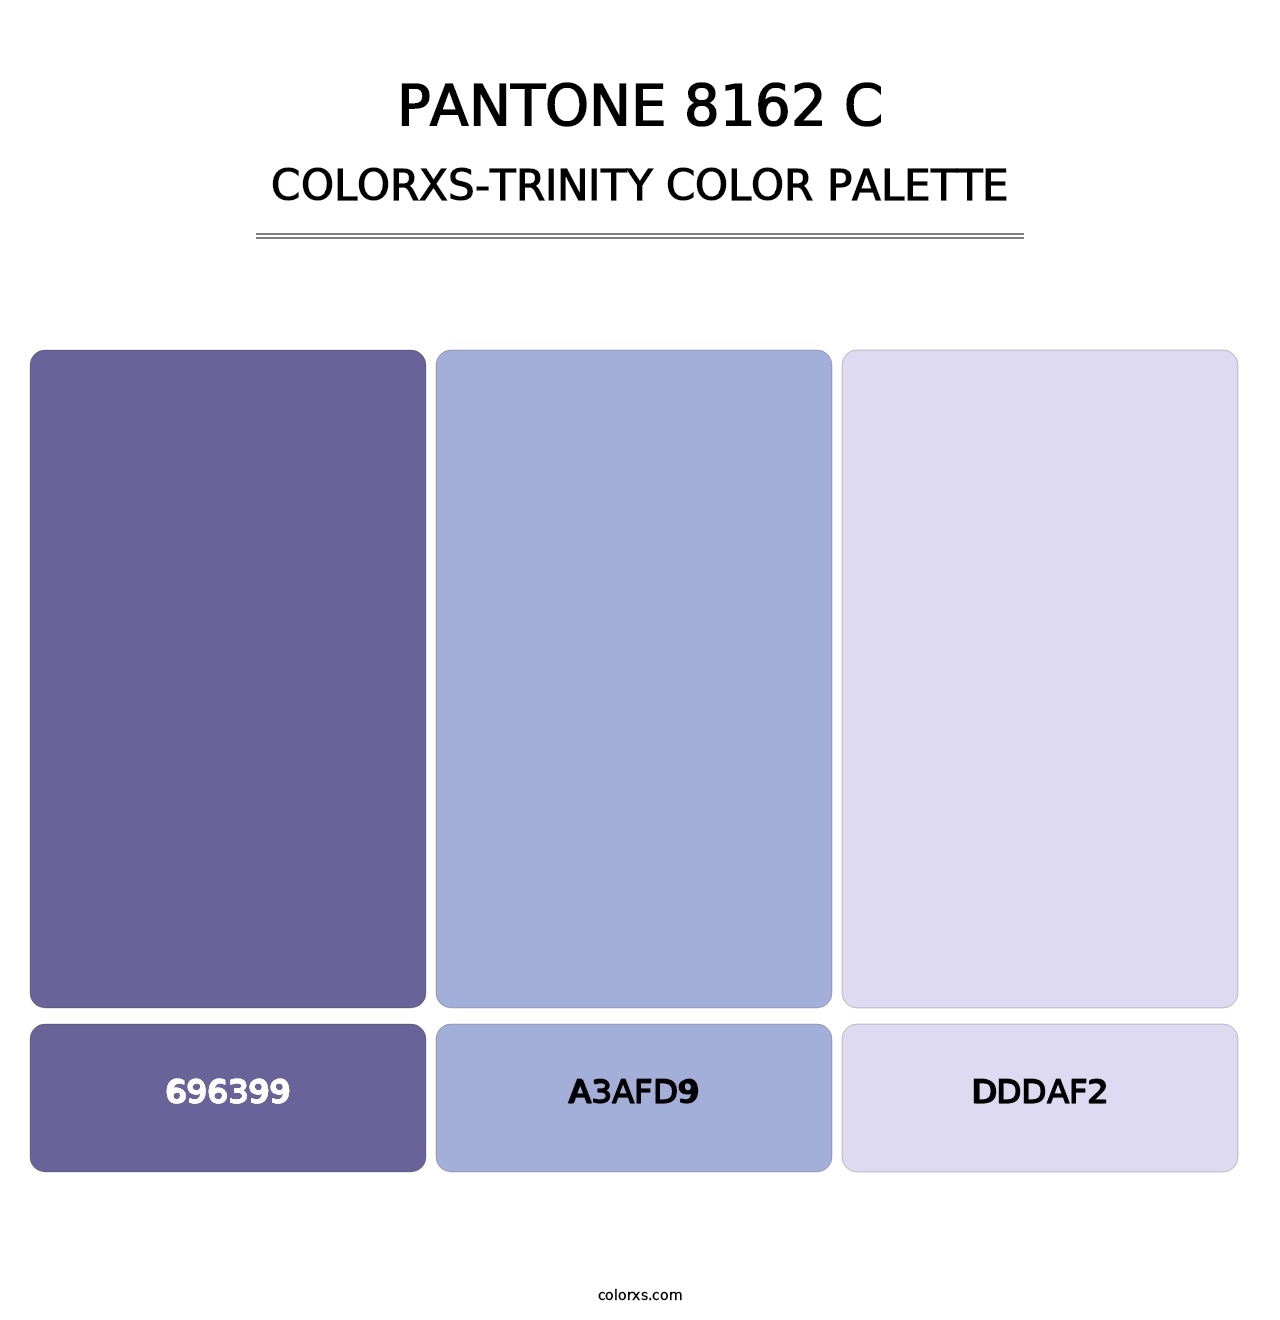 PANTONE 8162 C - Colorxs Trinity Palette